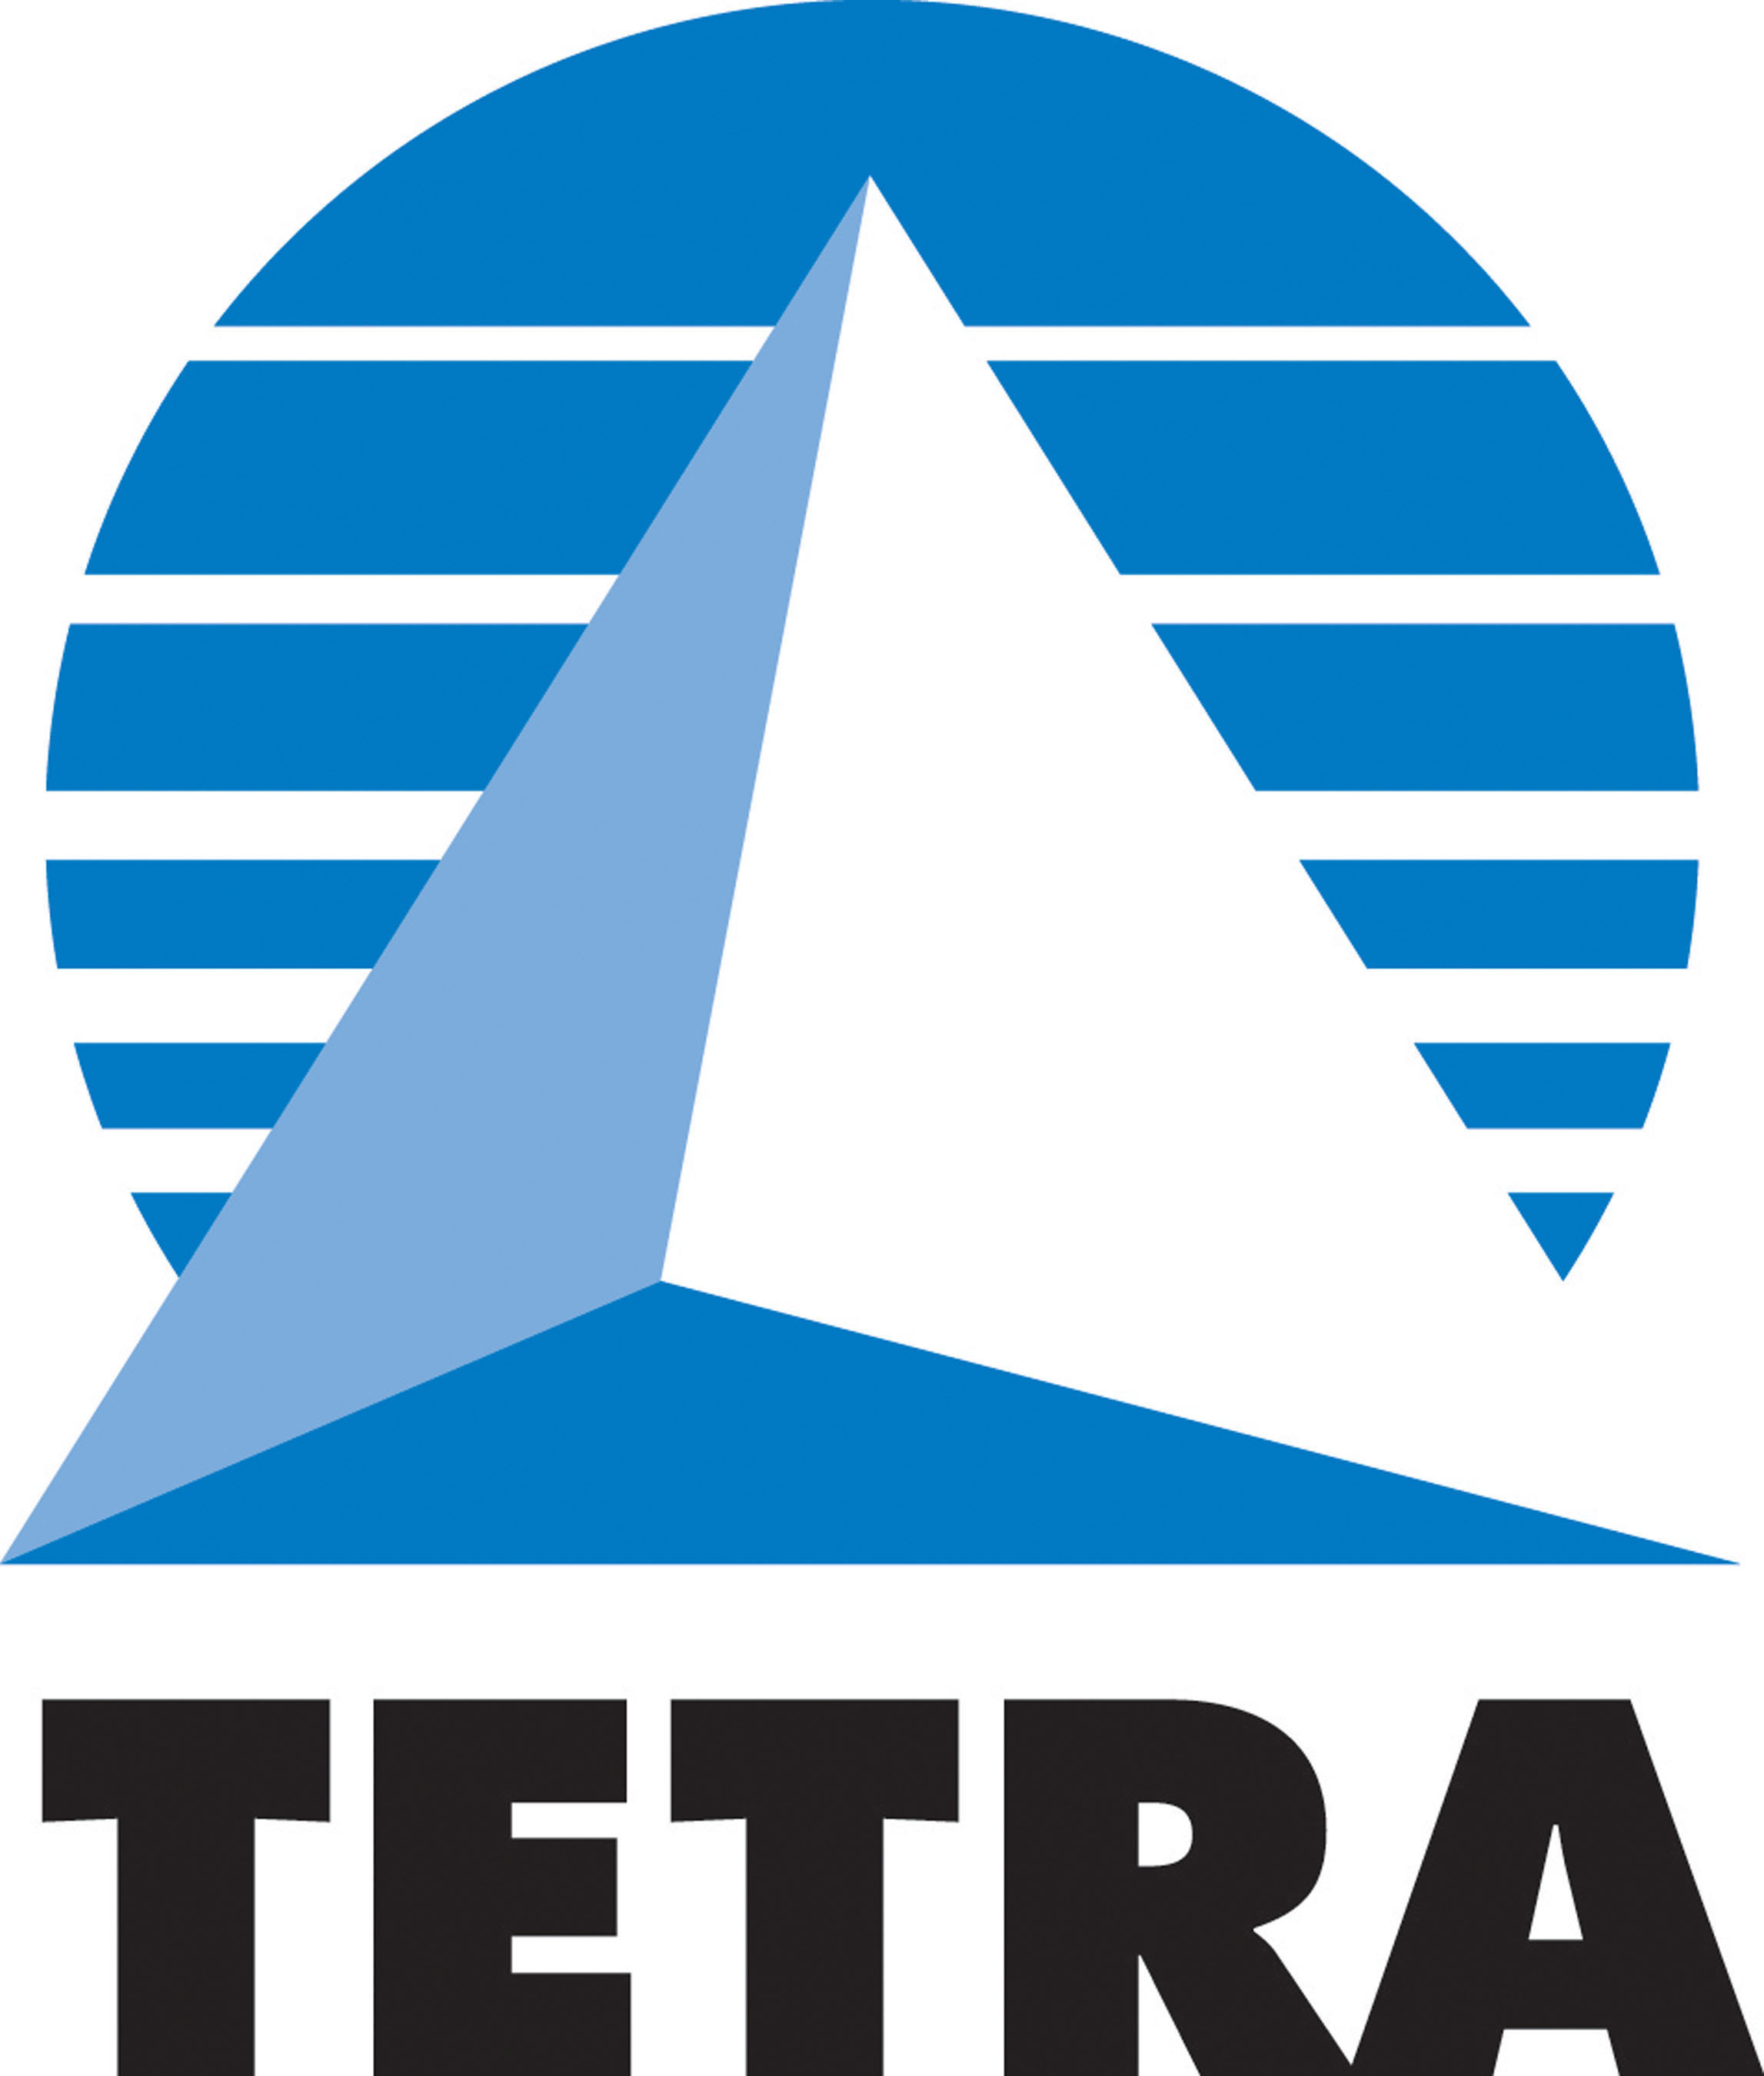 TETRA Technologies, Inc. logo.